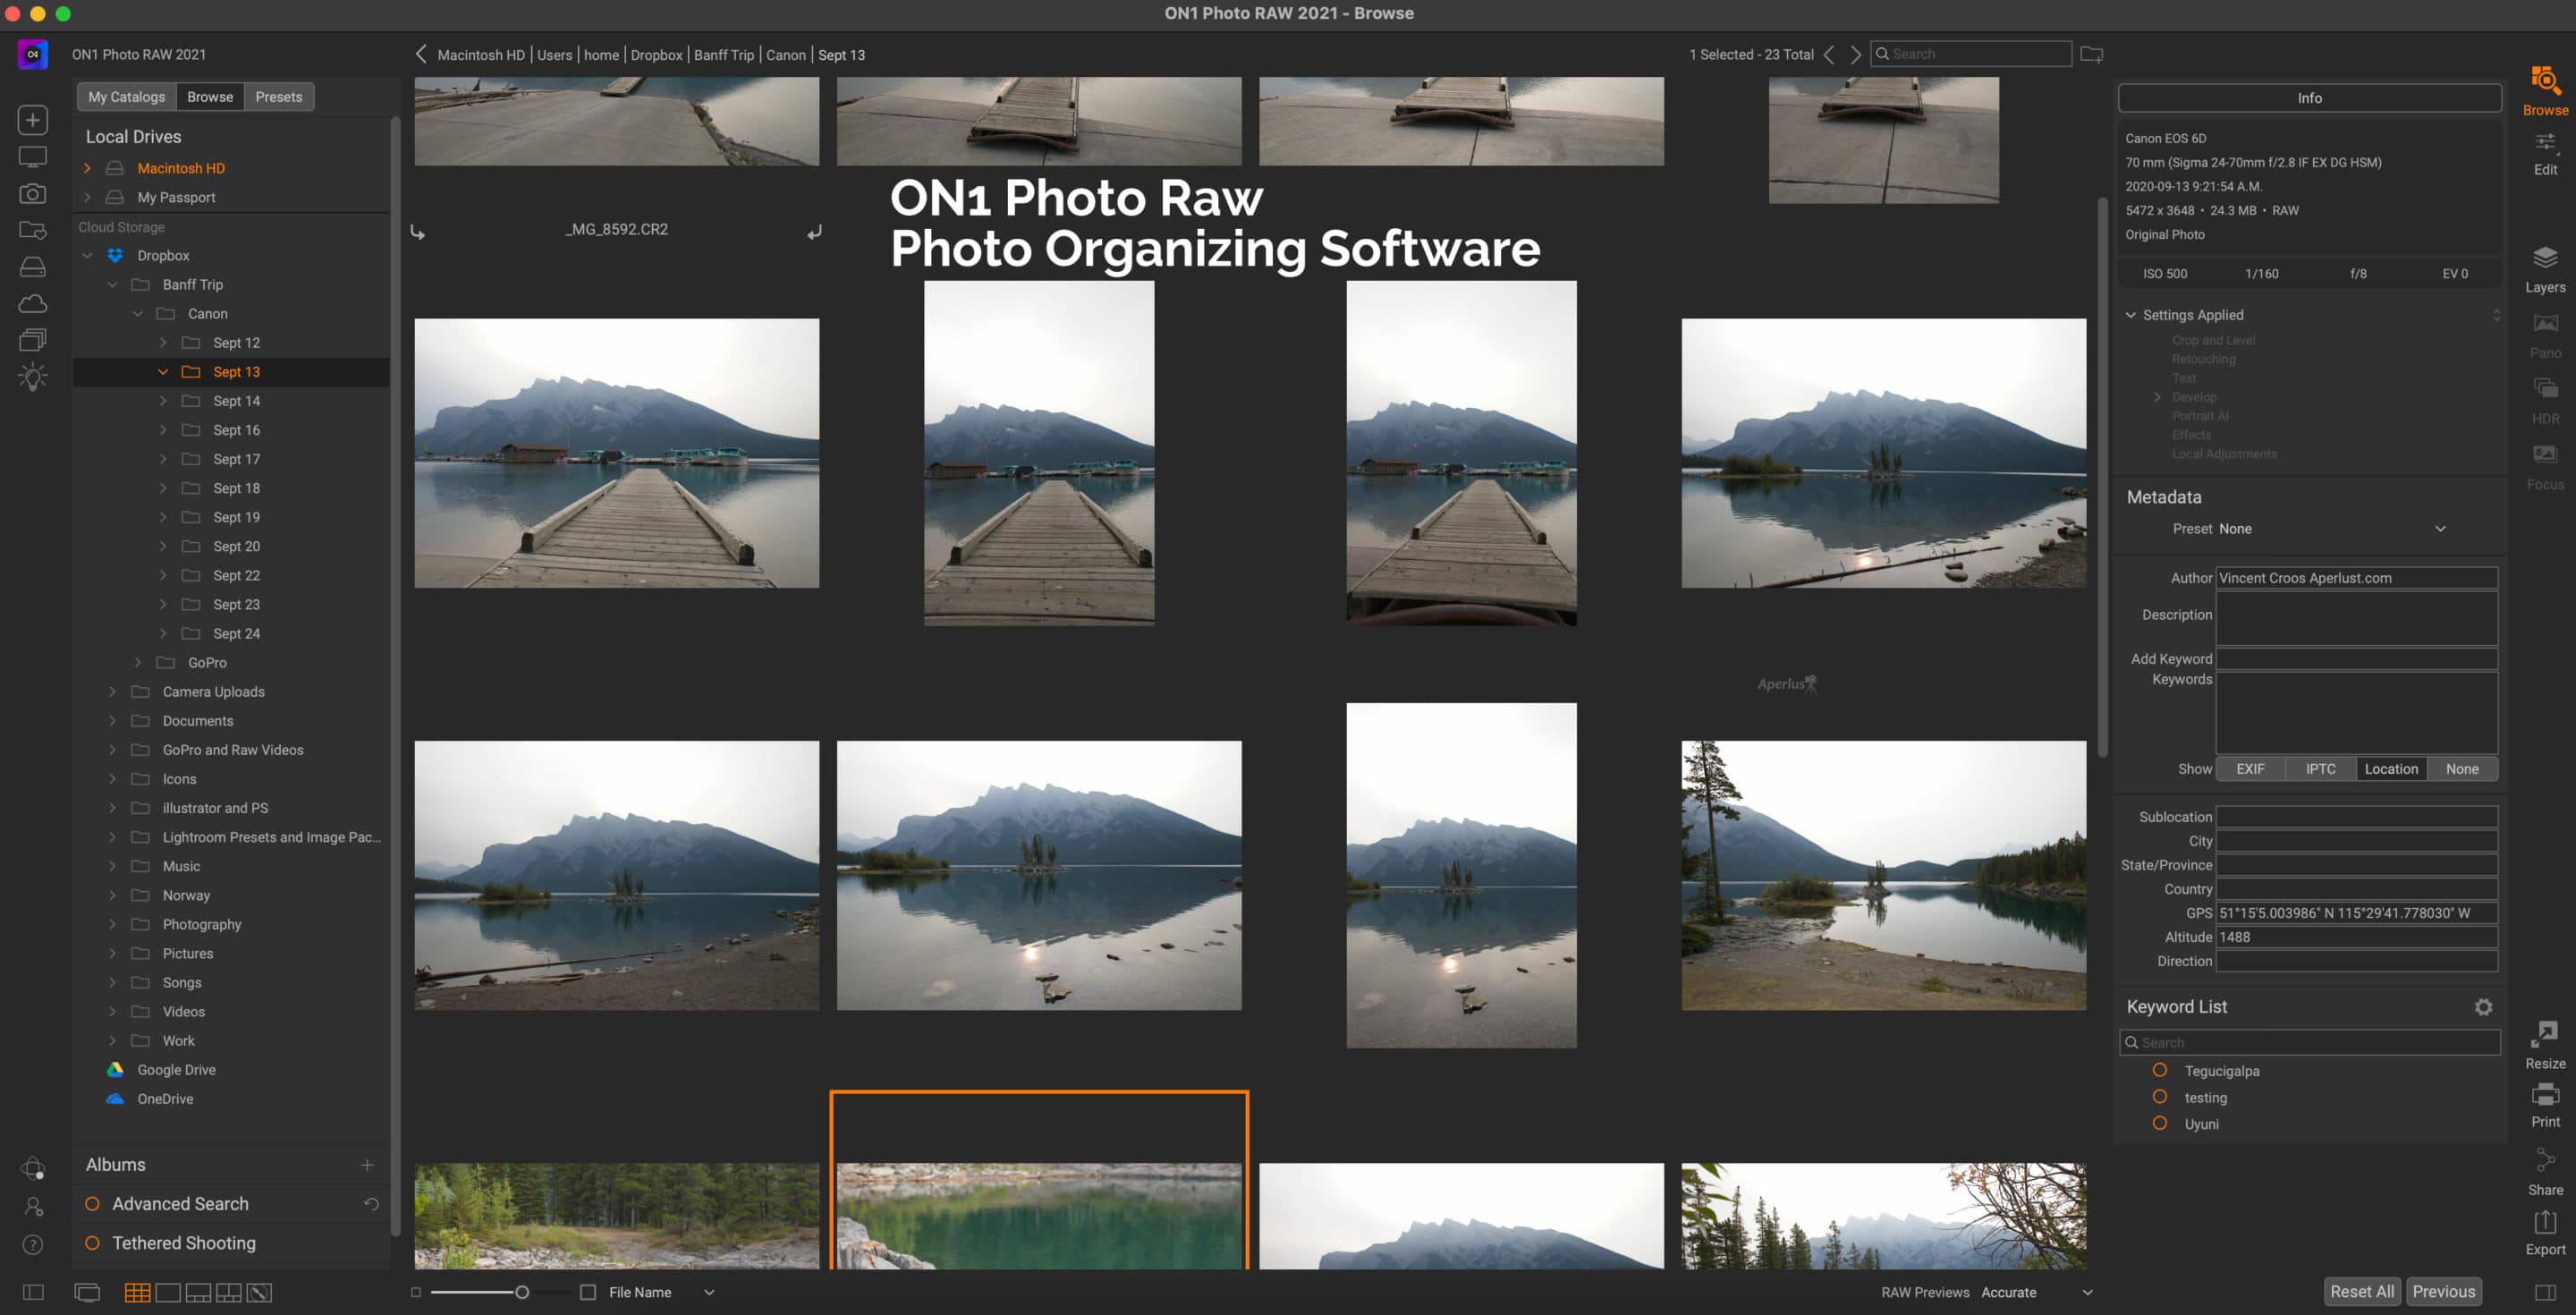 ON1 Photo RAW photo organizing software screen shot